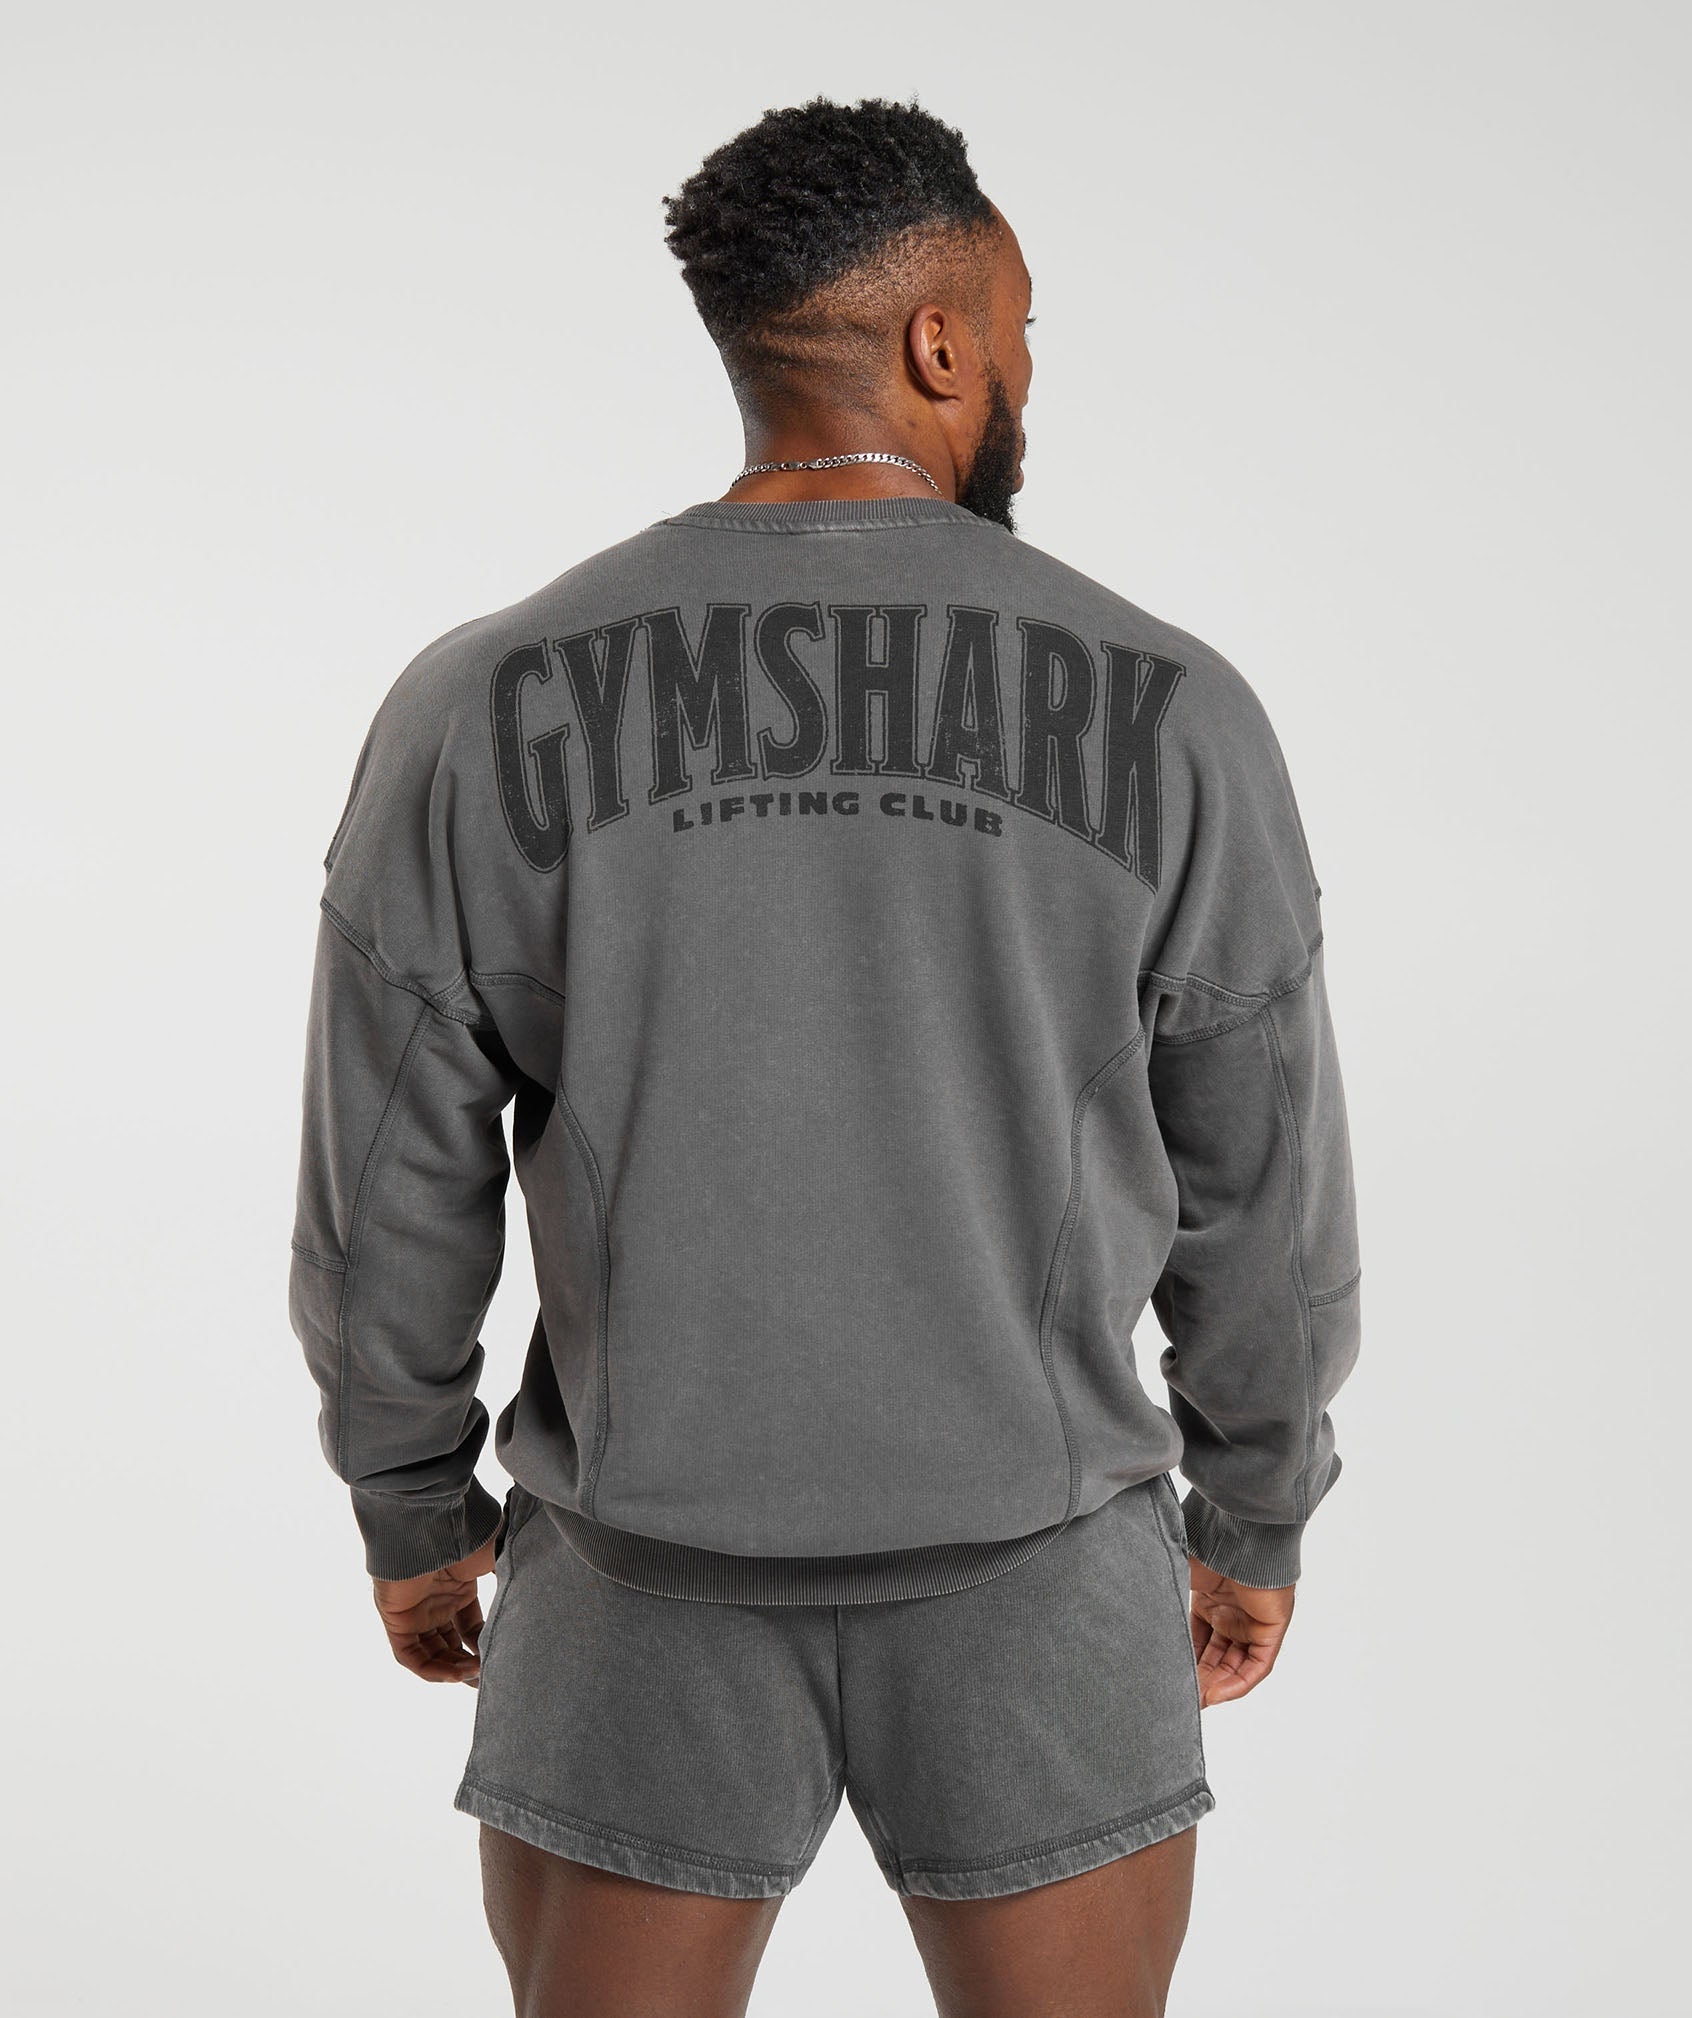 Conjunto gymshark NUEVO 🤤🔥 🚫 VENDIDO🚫 Talla: M $1300 O